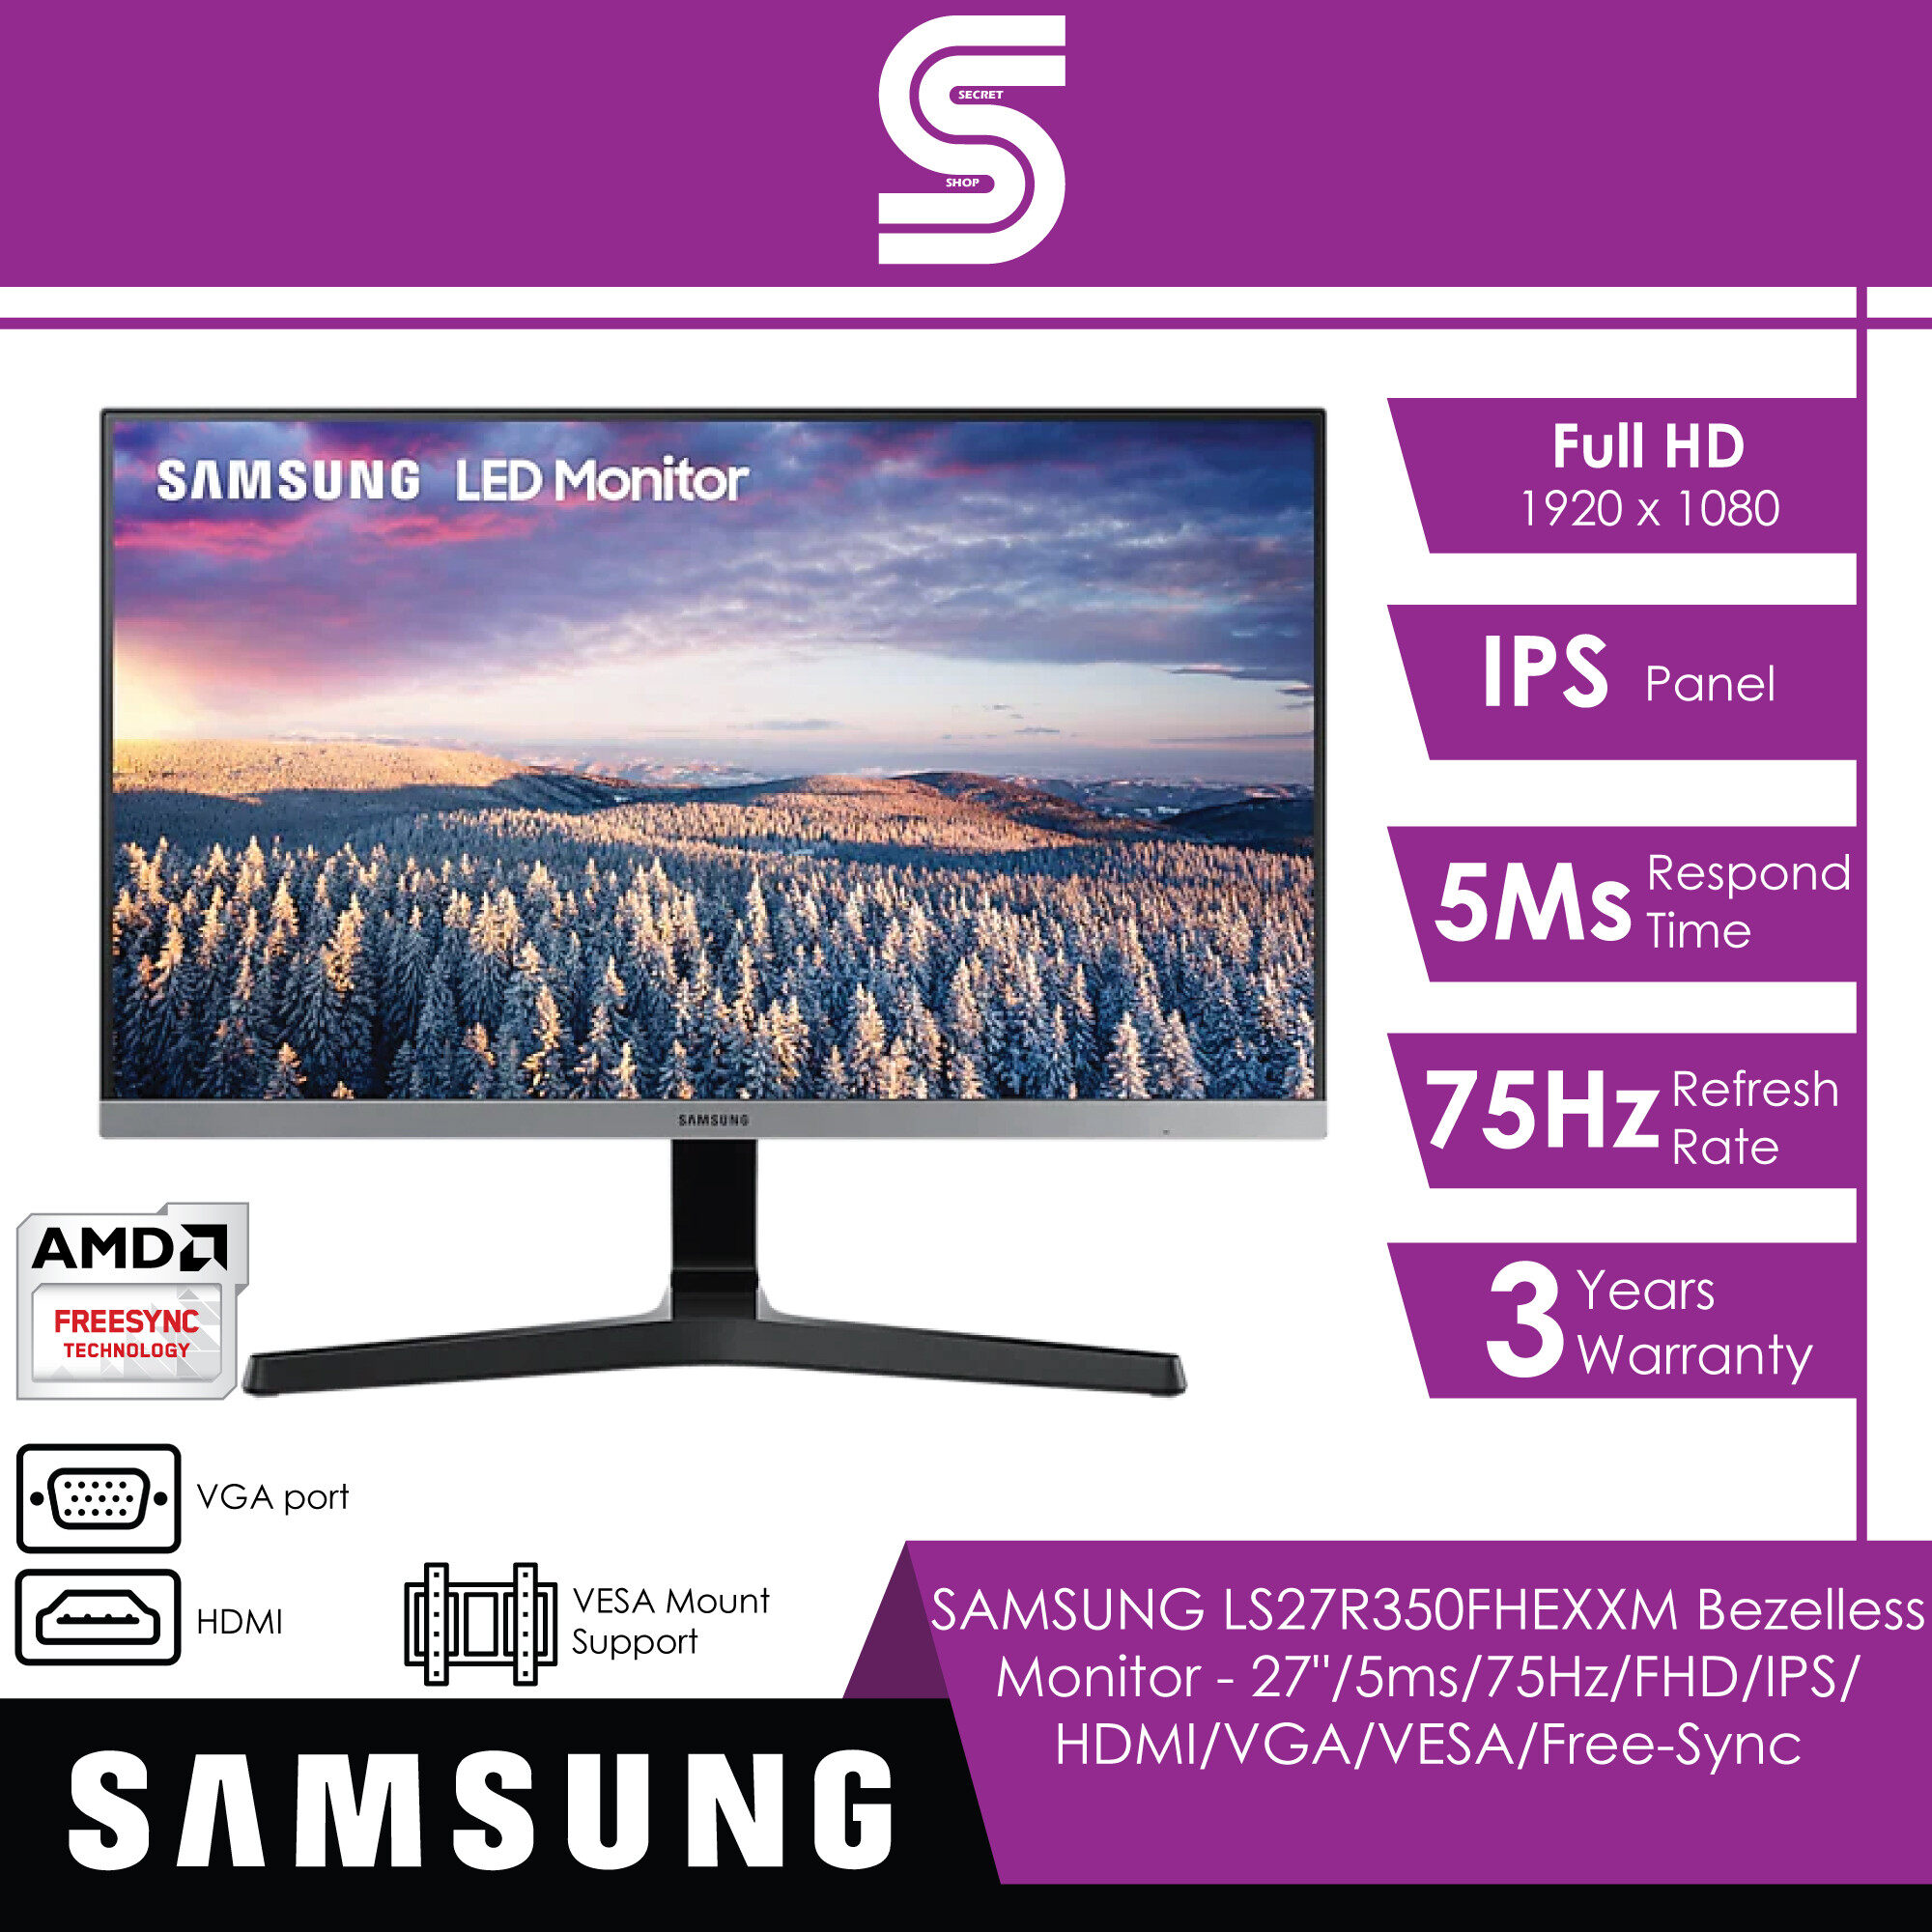 SAMSUNG LS27R350FHEXXM Bezelless Monitor - 27"/5ms/75Hz/FHD/IPS/HDMI/VGA/VESA/Free-Sync